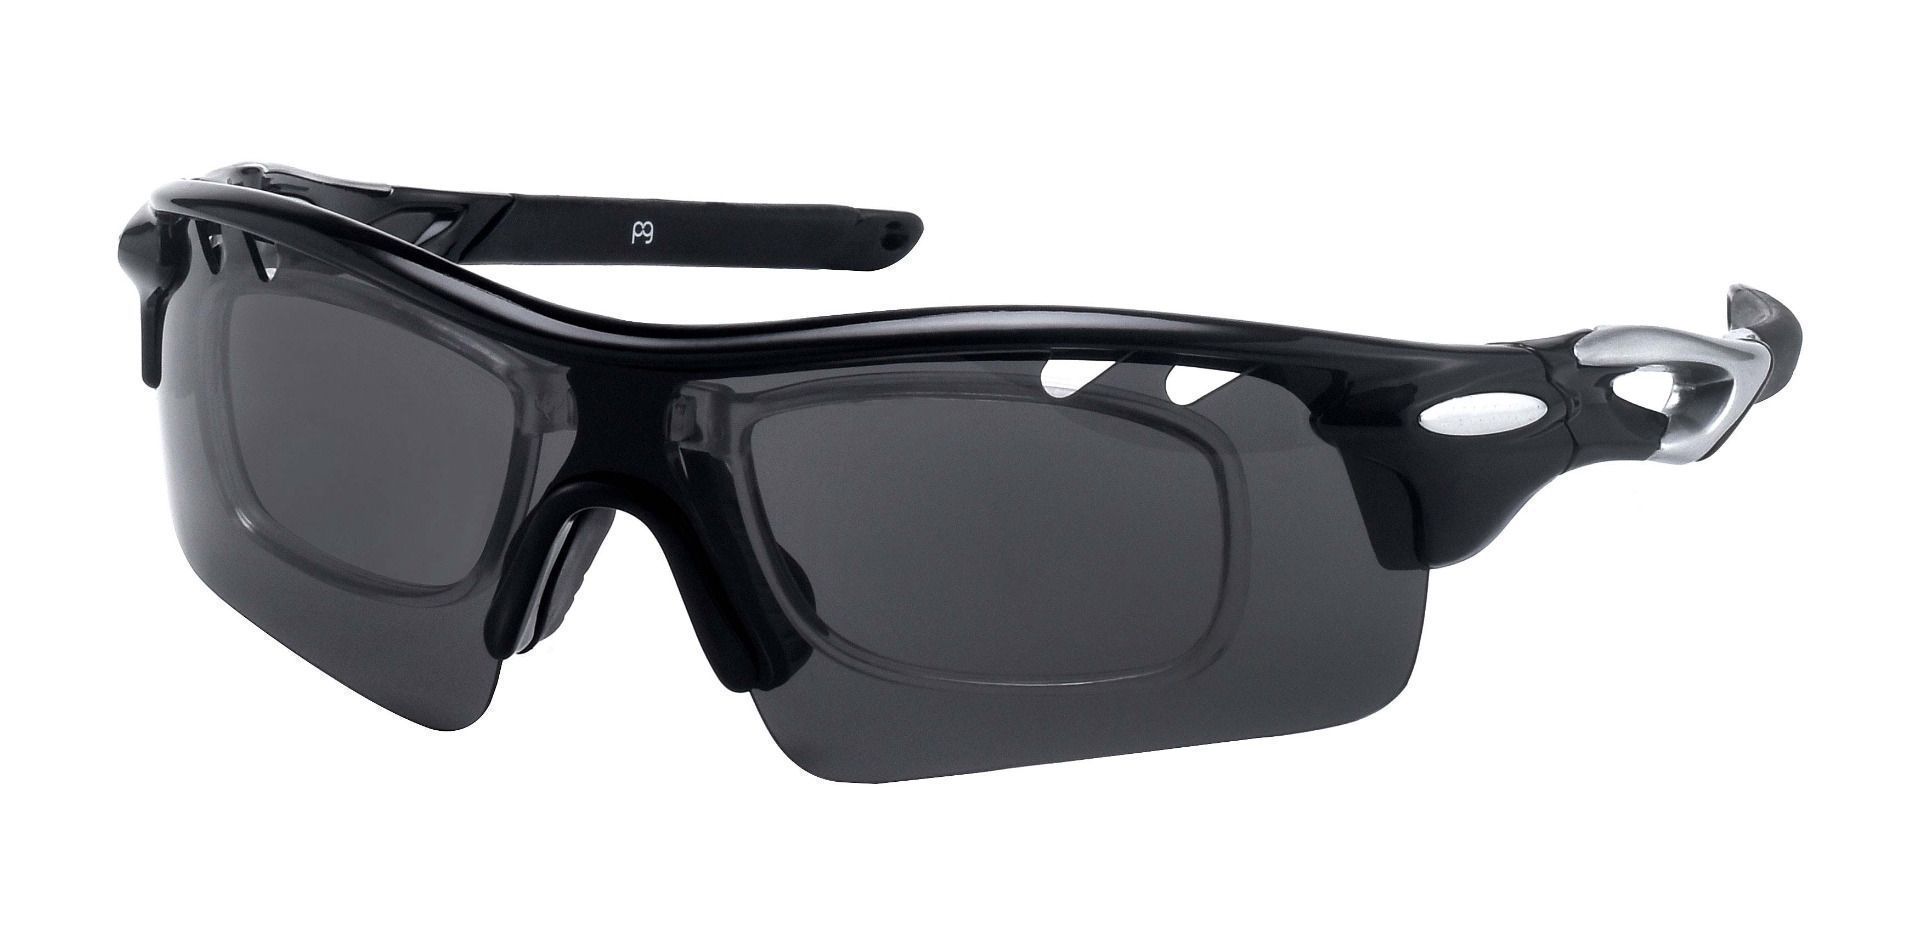 Wraparound Sport Prescription Sunglasses with RX Lens Insert - Jackson Black